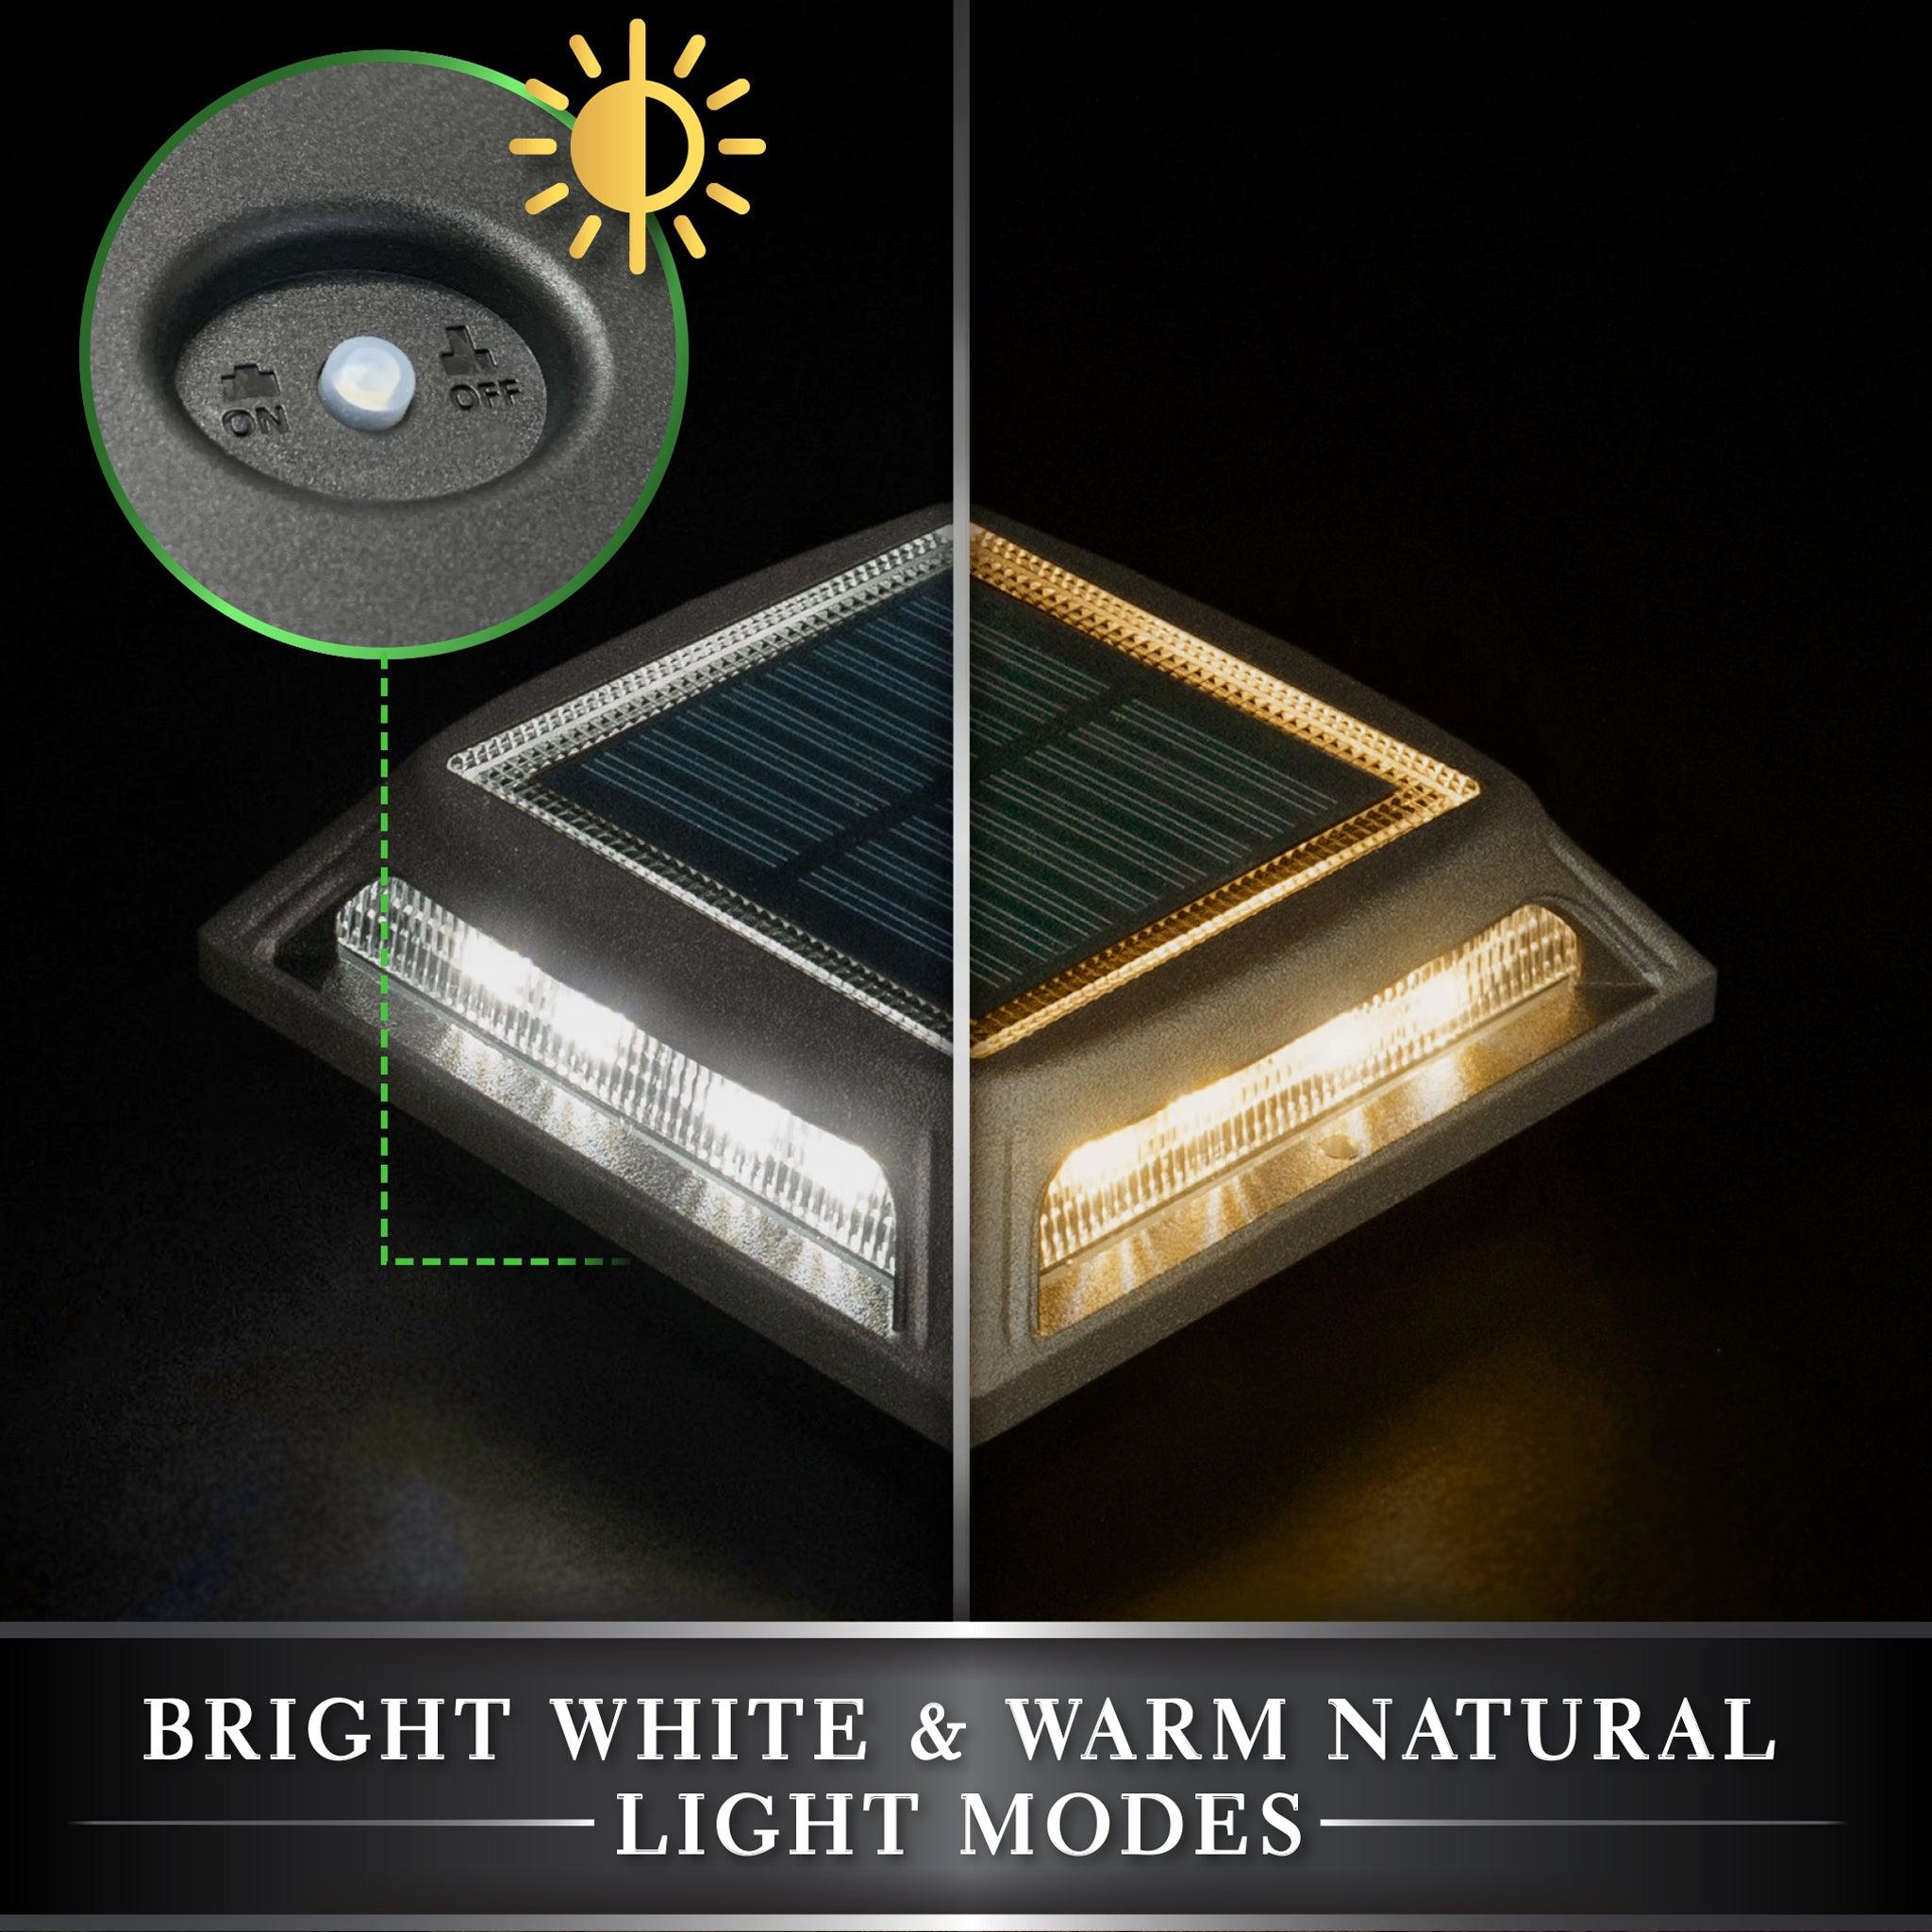 Muskoka Universal Solar Dock/Deck & Post Cap Light - Black - Classy Caps Mfg. Inc.